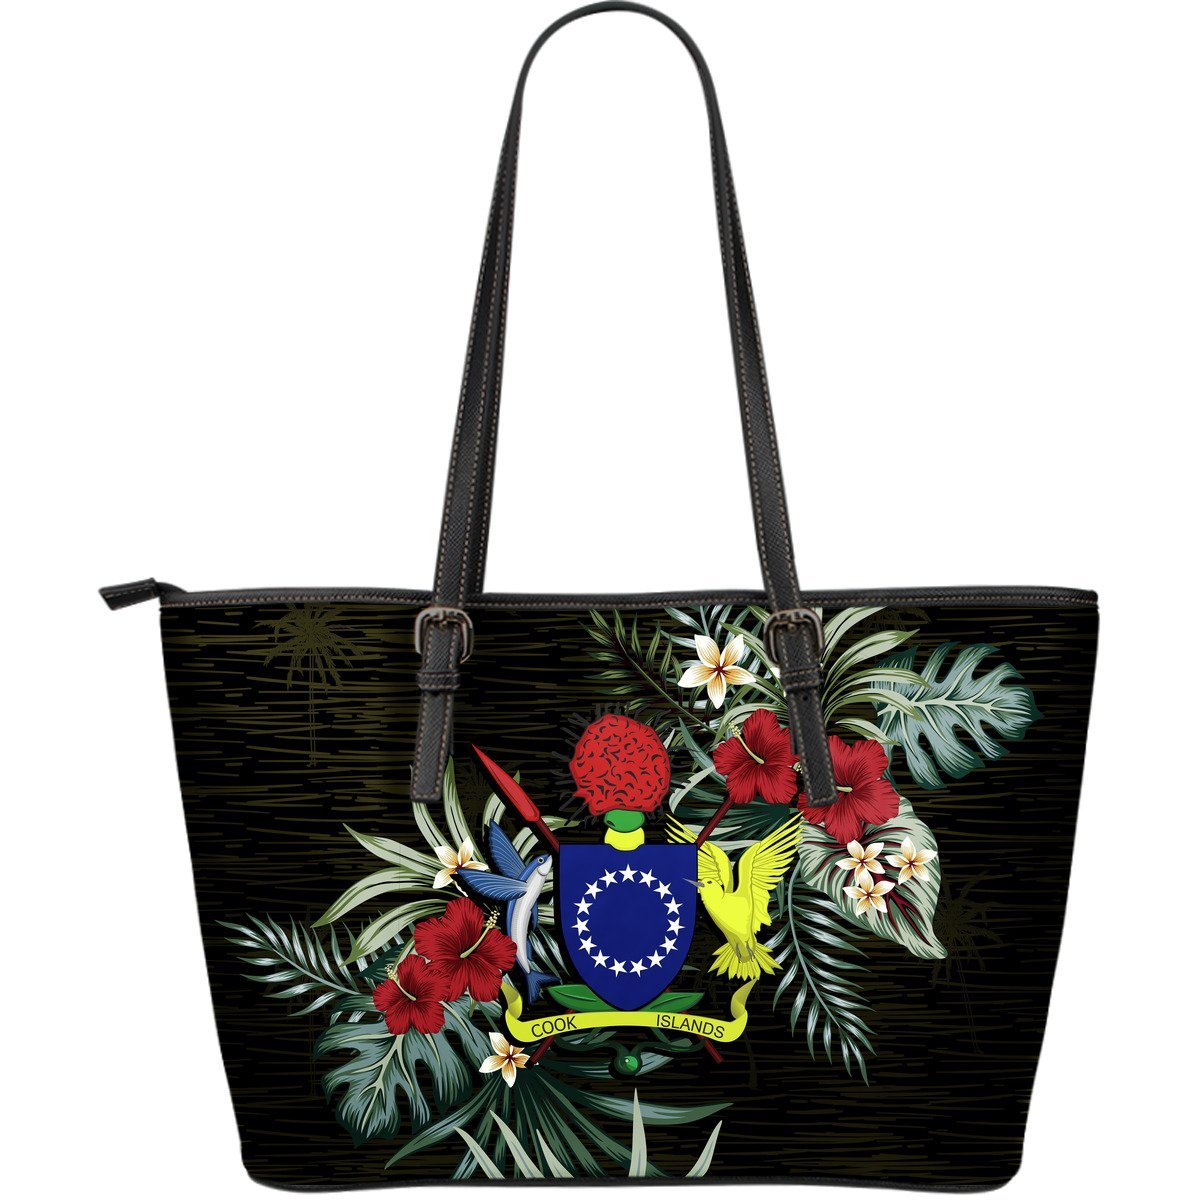 Cook Islands Hibiscus Large Leather Tote Bag Black - Polynesian Pride